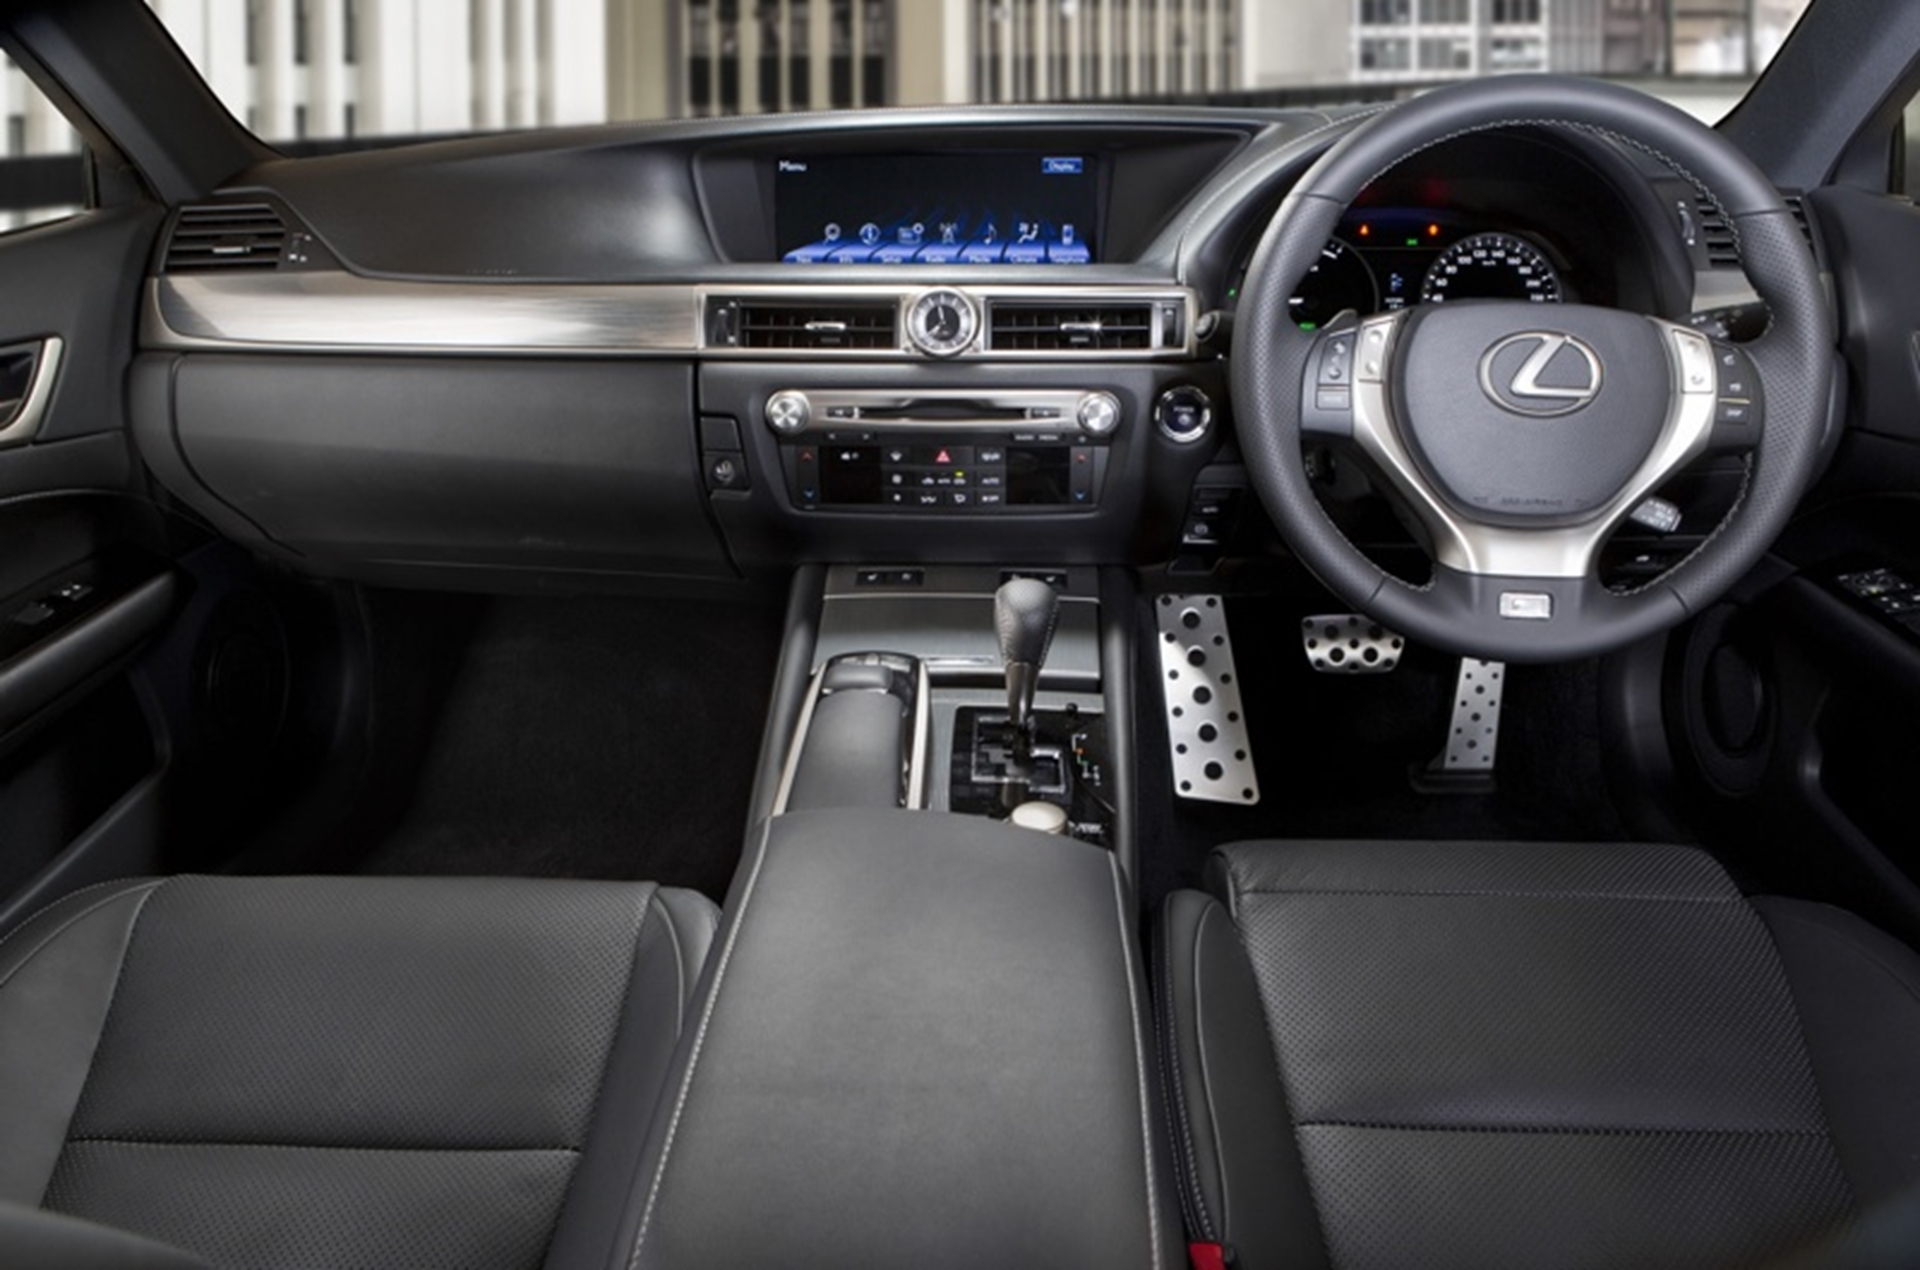 Lexus GS – the new face of Lexus